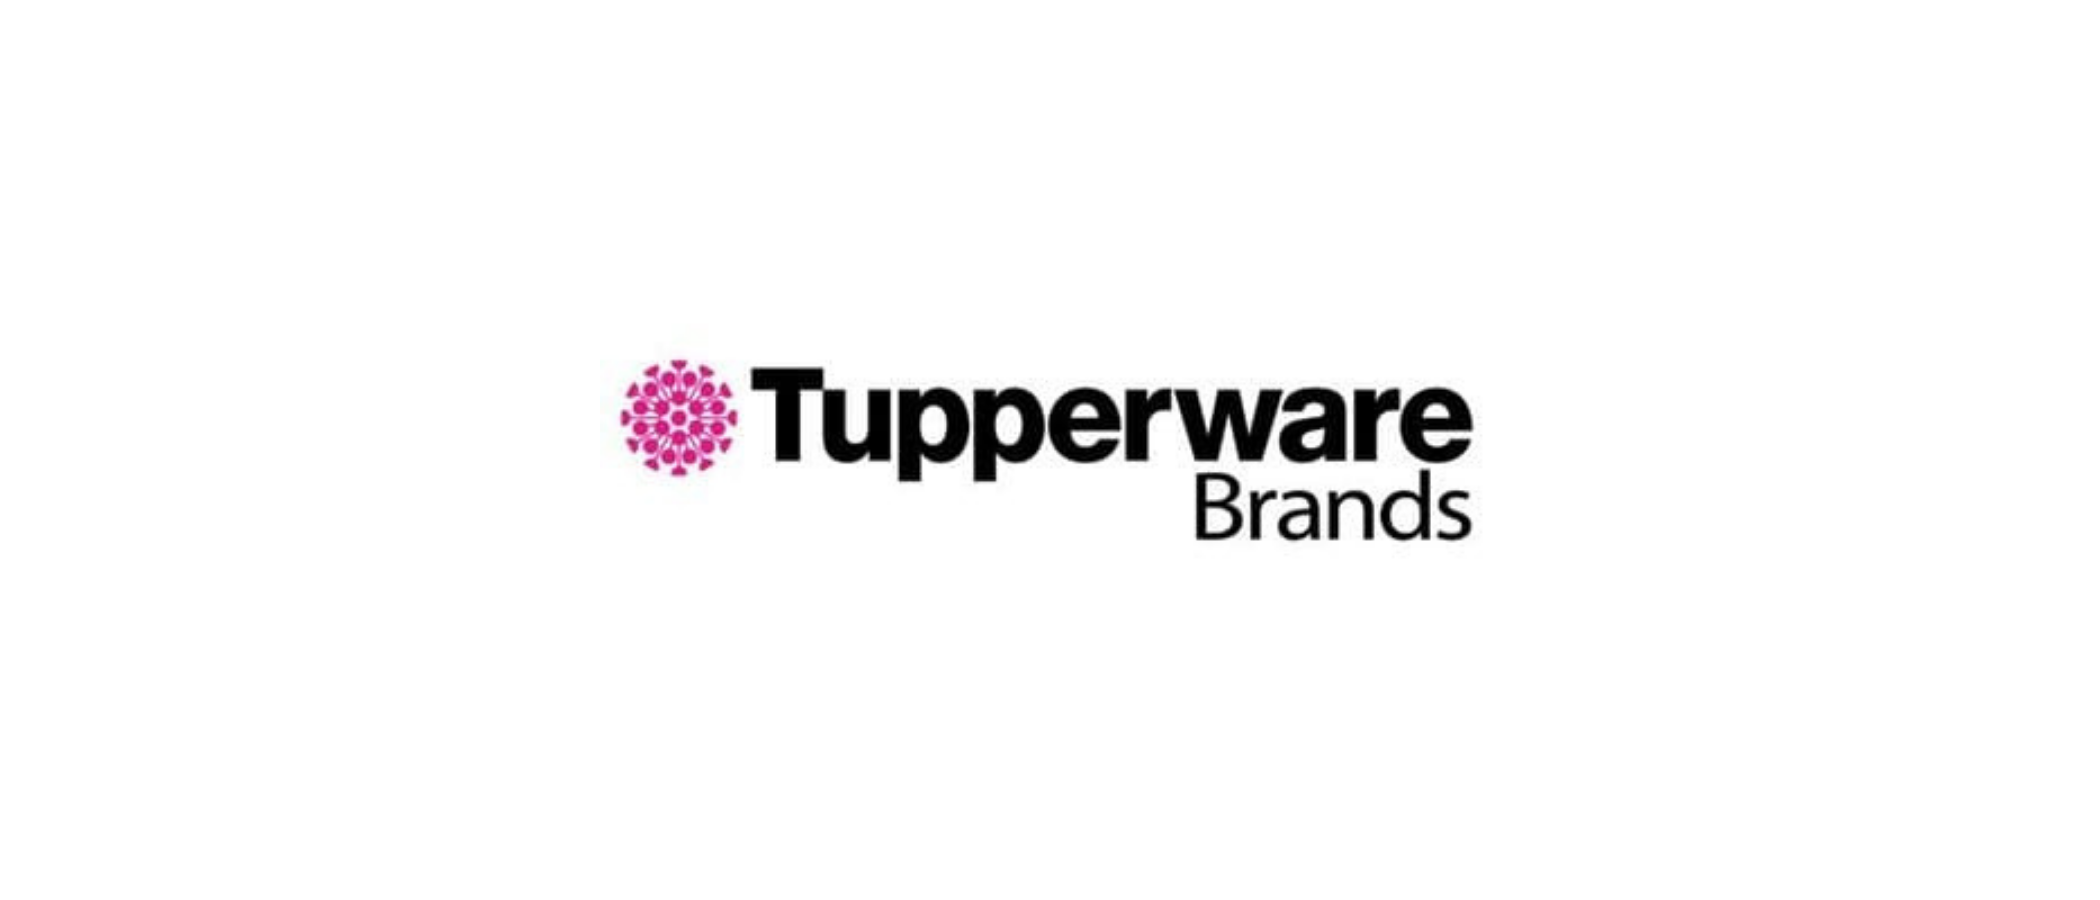 https://www.directsellingnews.com/wp-content/uploads/2021/10/Tupperware-Brands-Logo.png